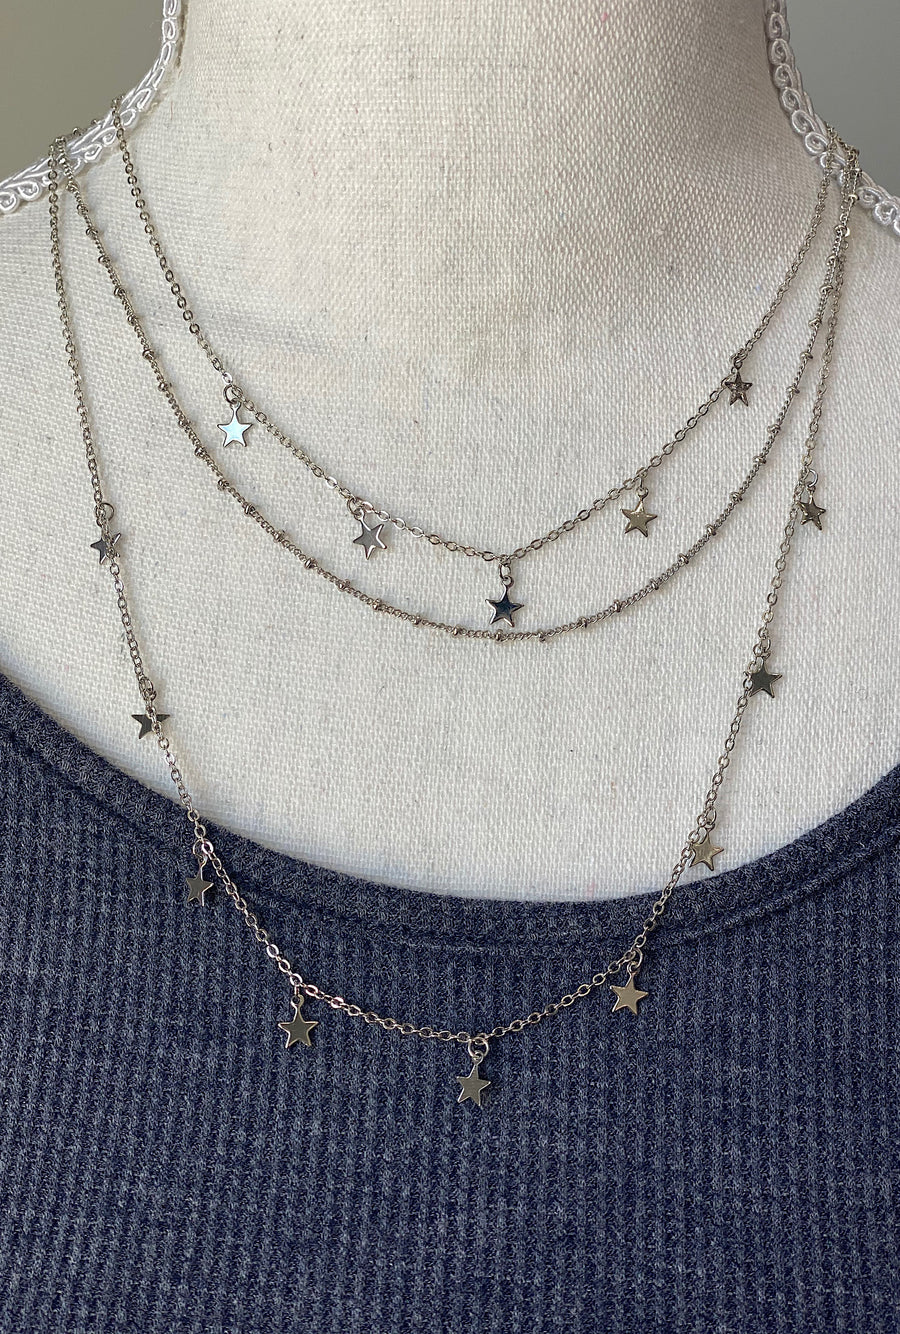 Silver Star Charm Necklace - Bellamie Boutique